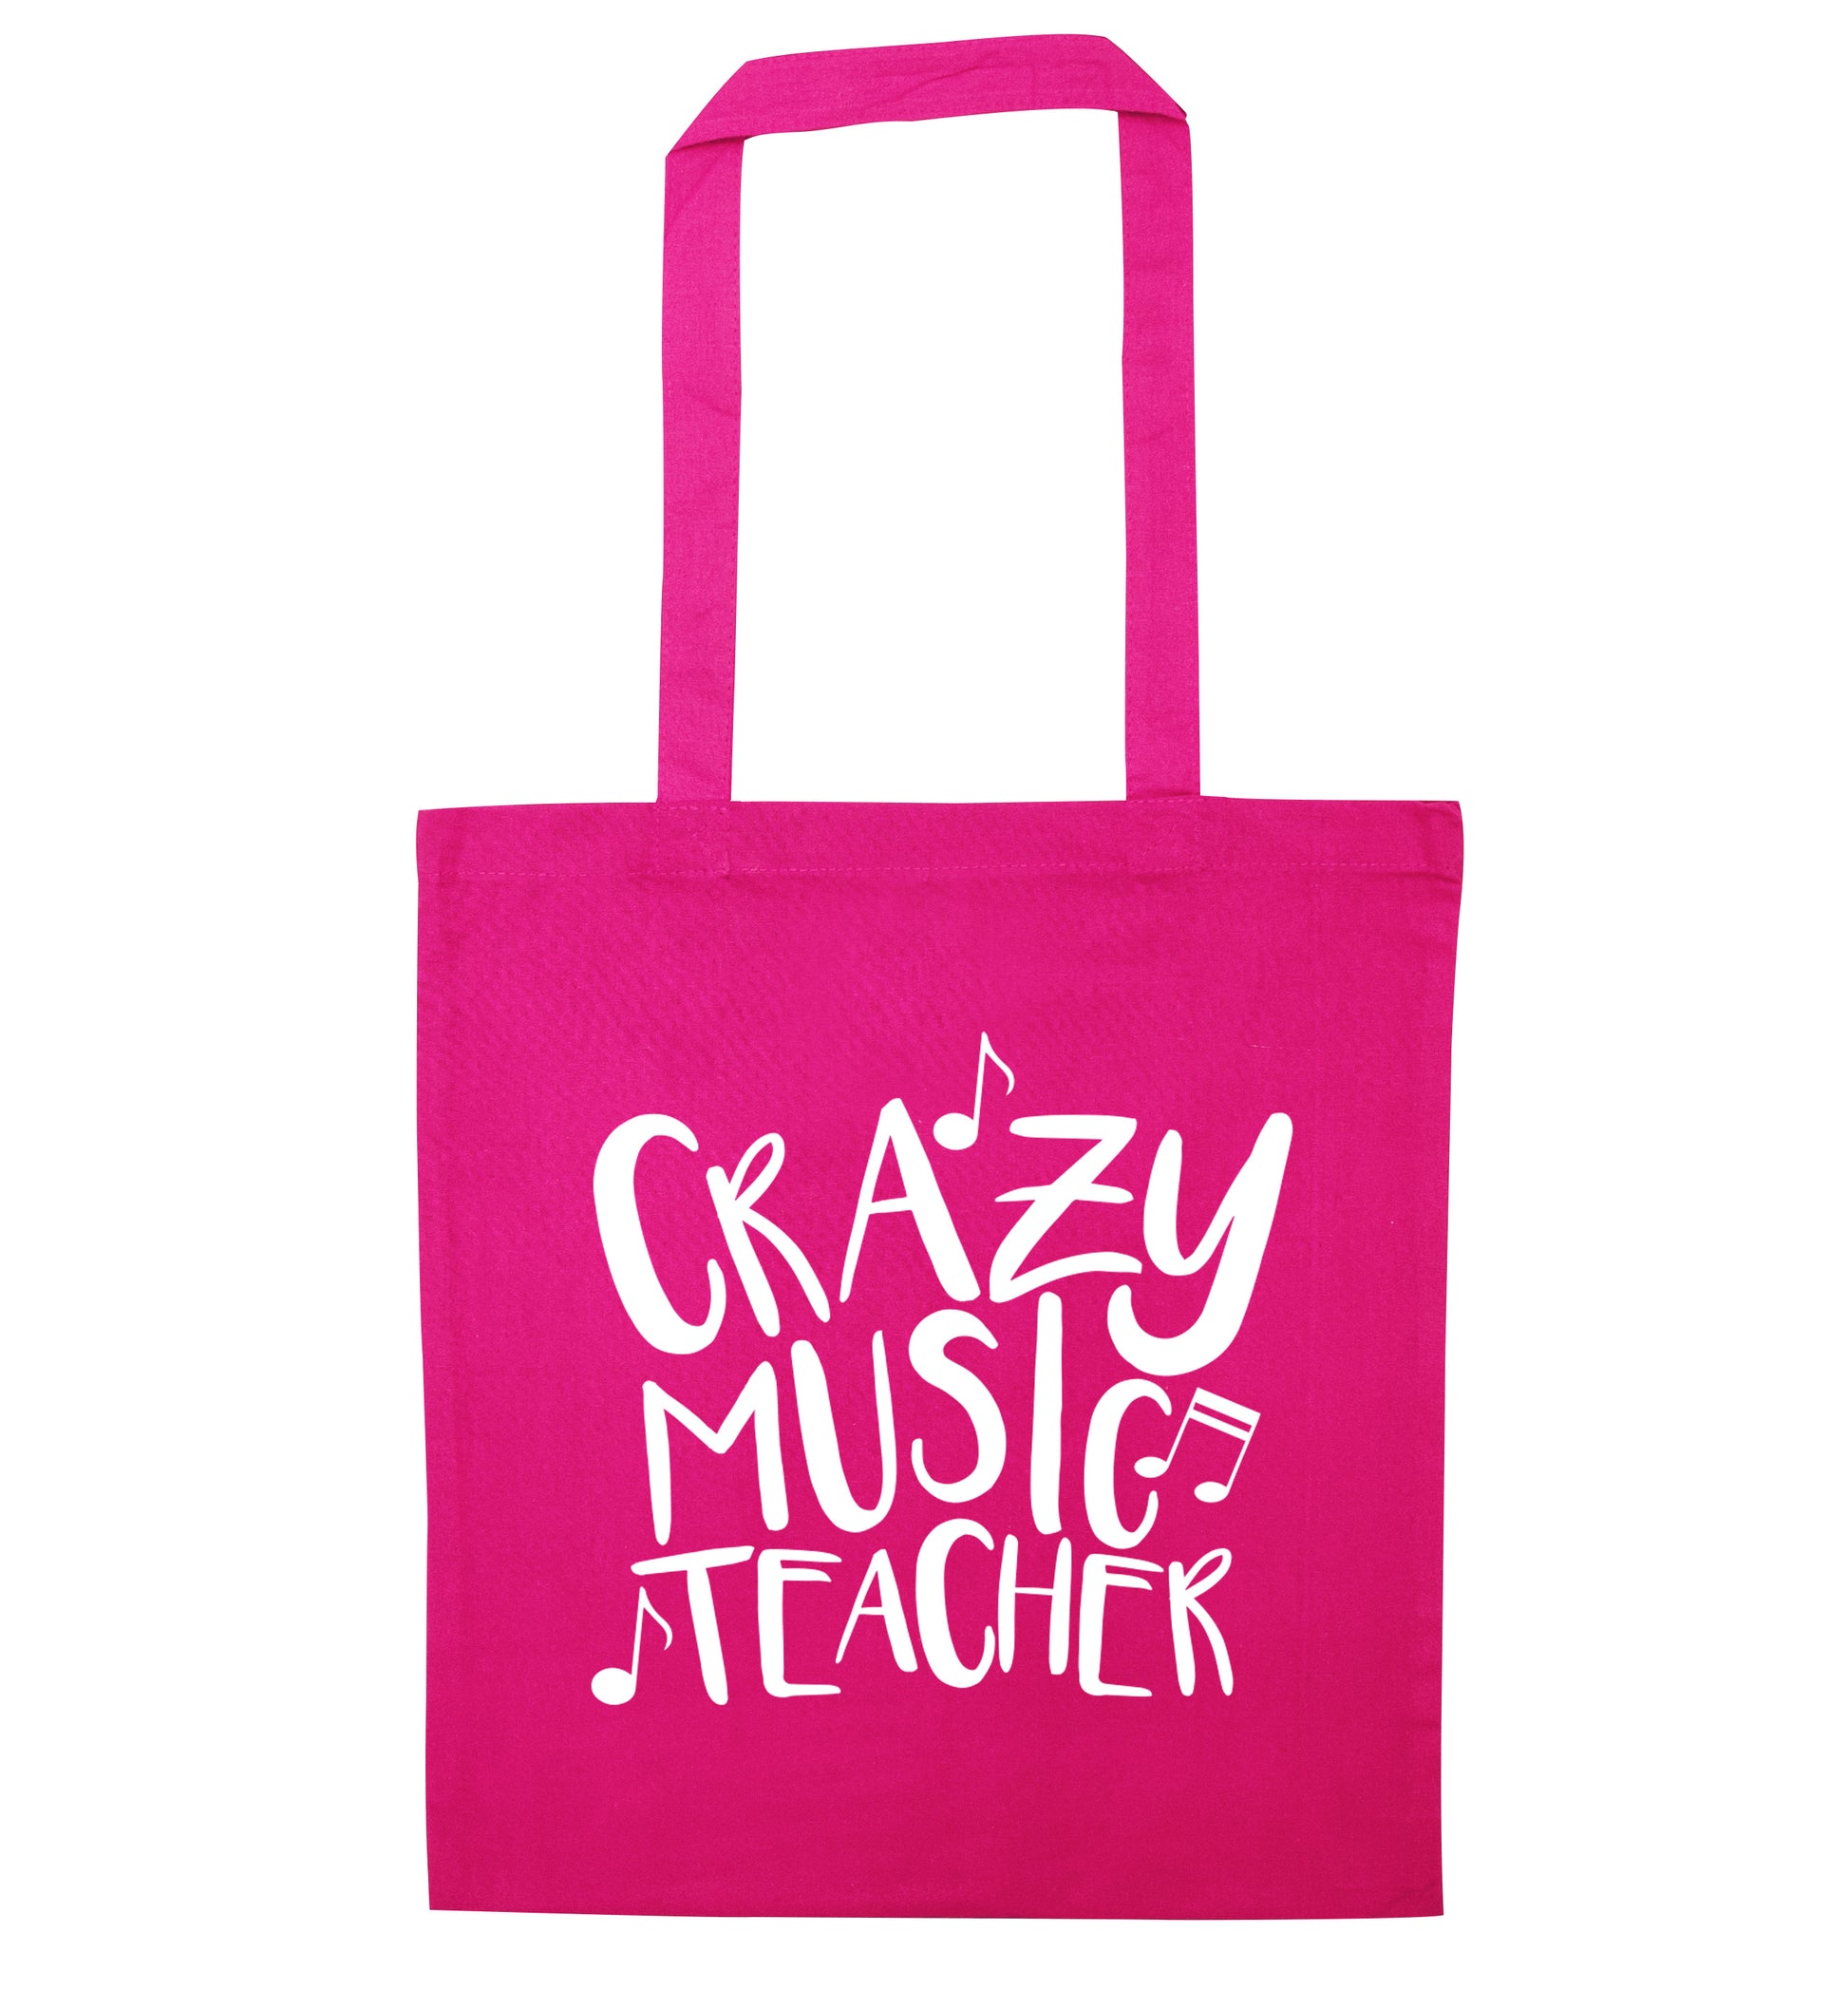 Crazy music teacher pink tote bag